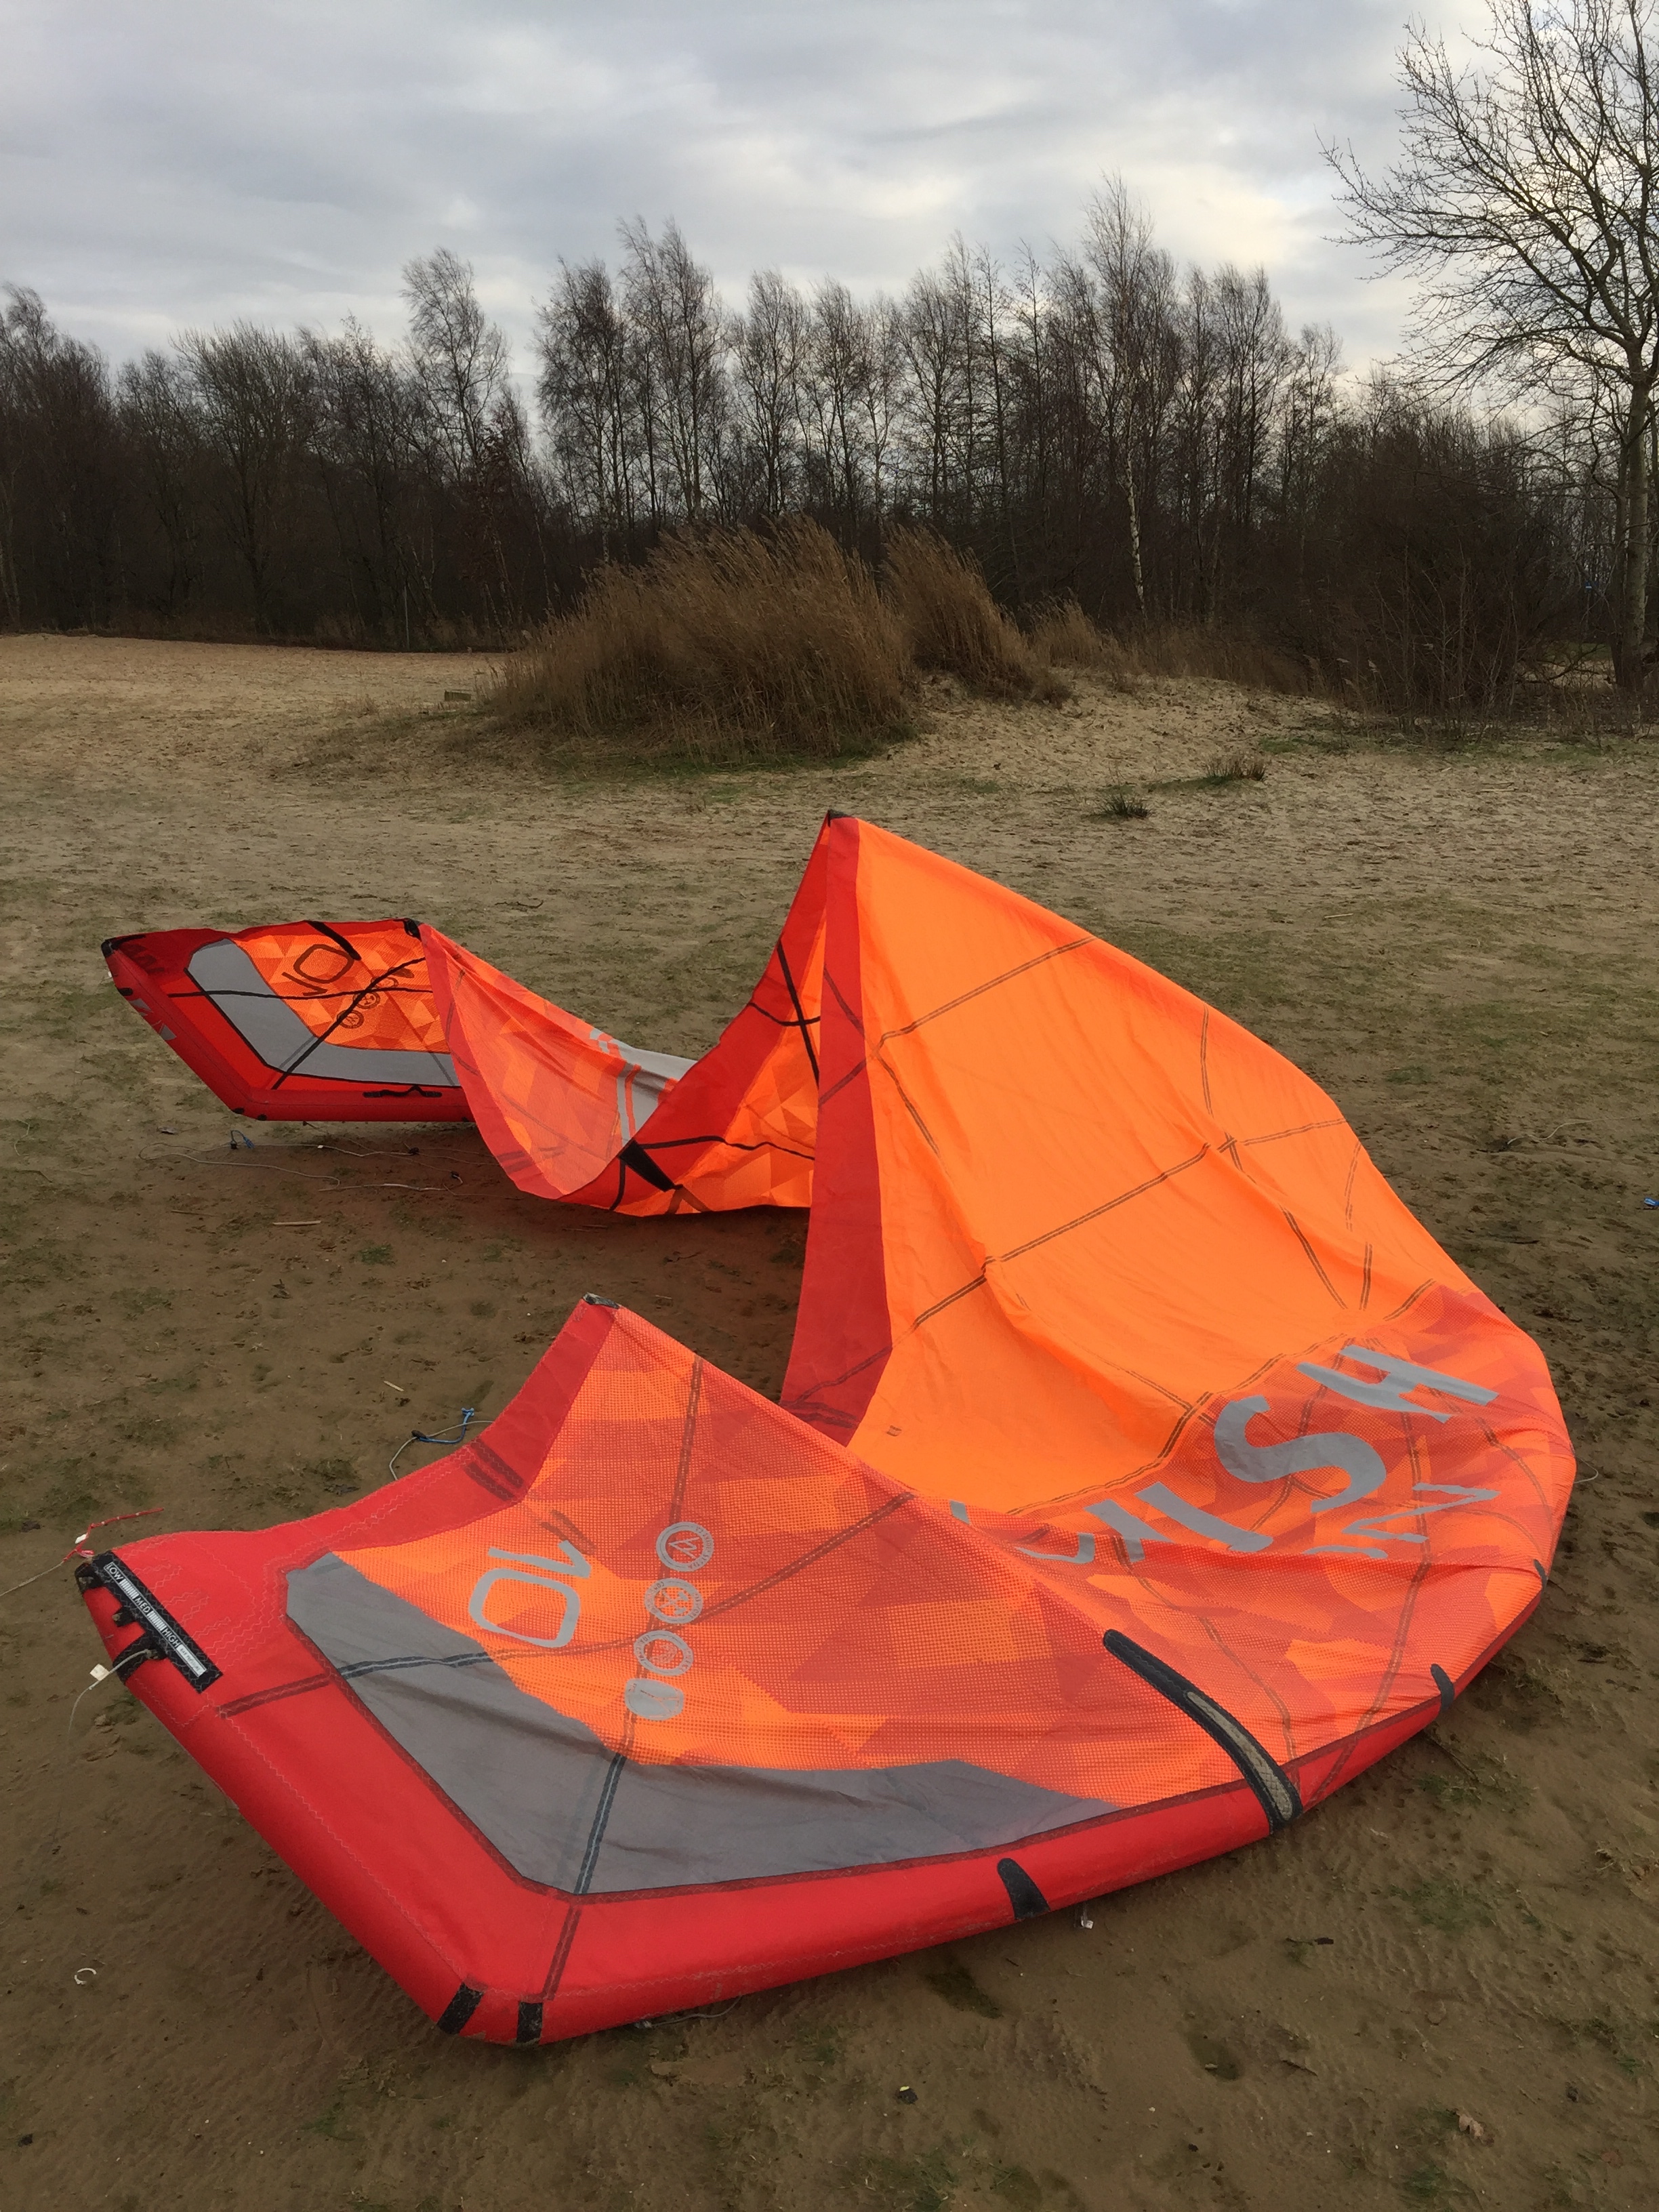 Airush Union 2016 kite review